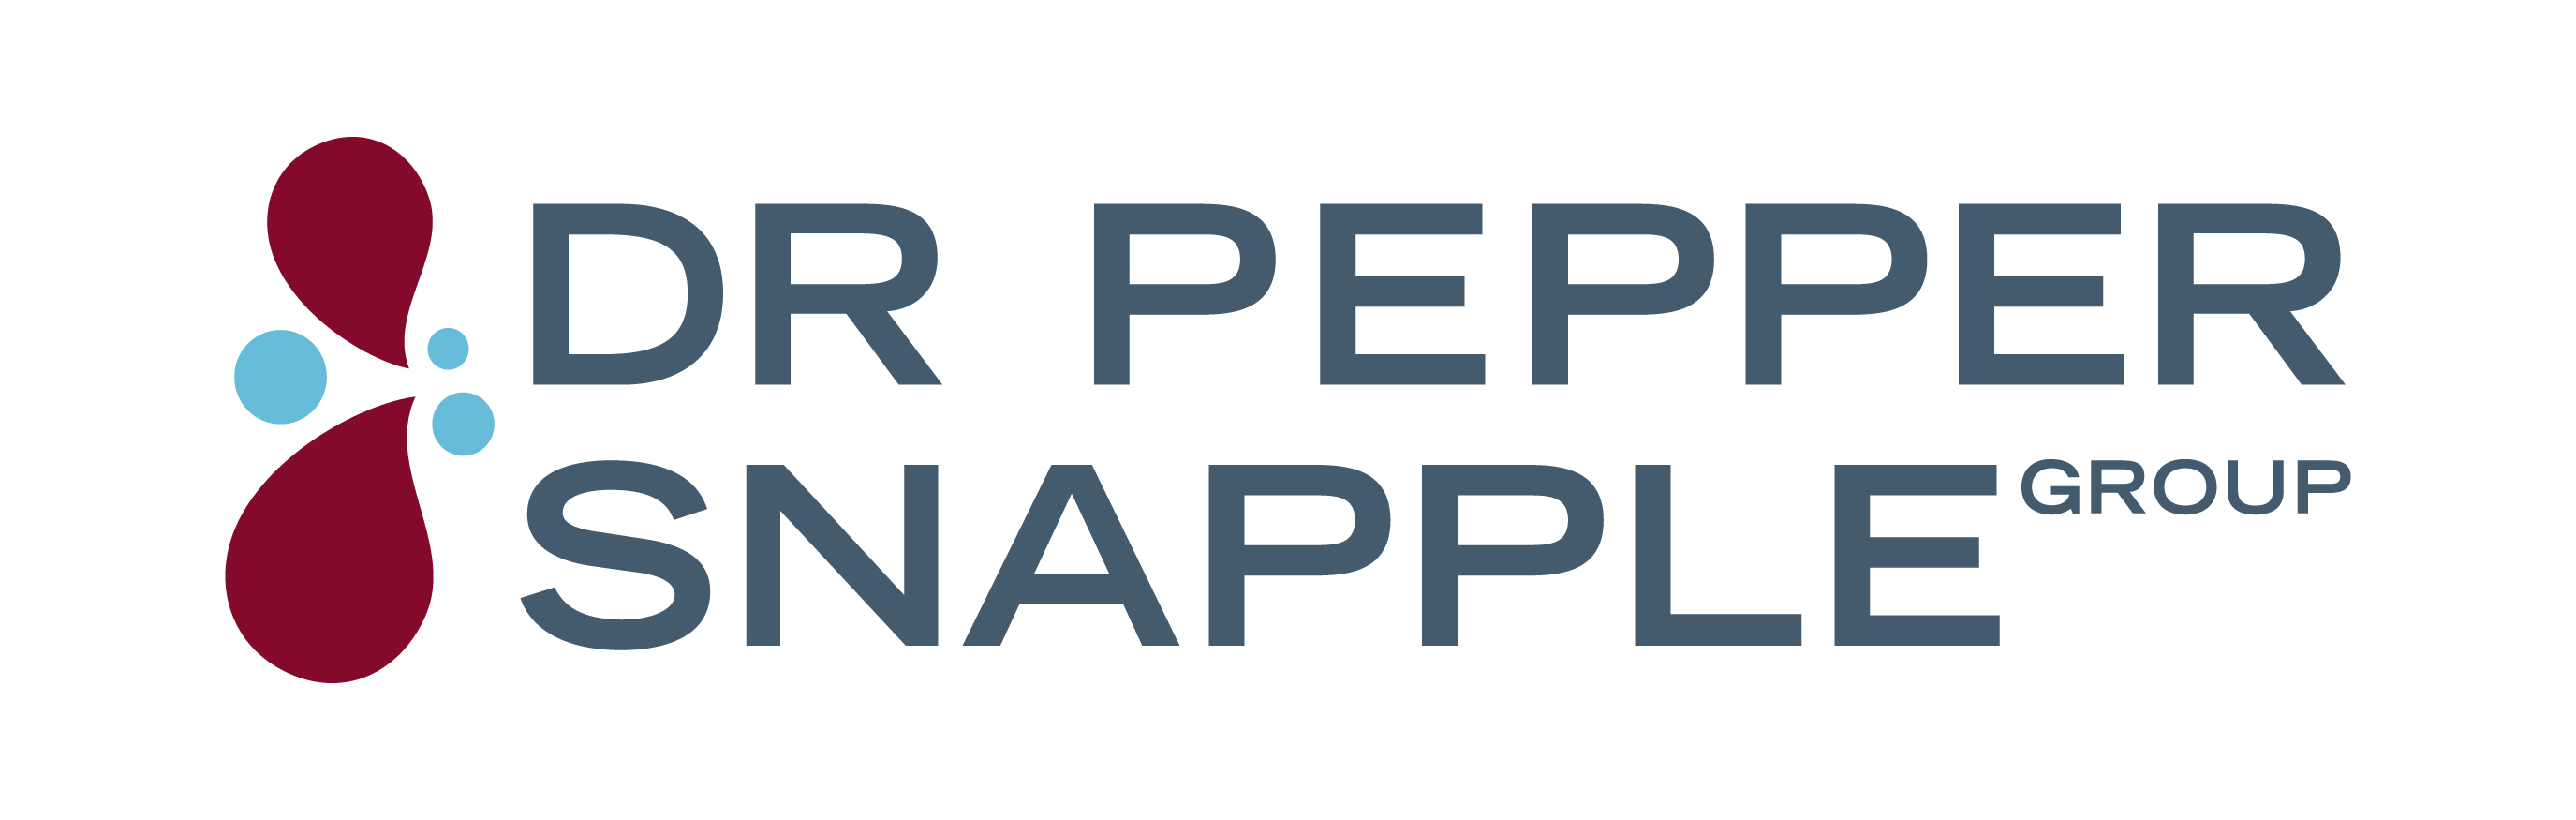 Dr Pepper Snapple Group Joins U.S. EPA SmartWay Transport Partnership Image